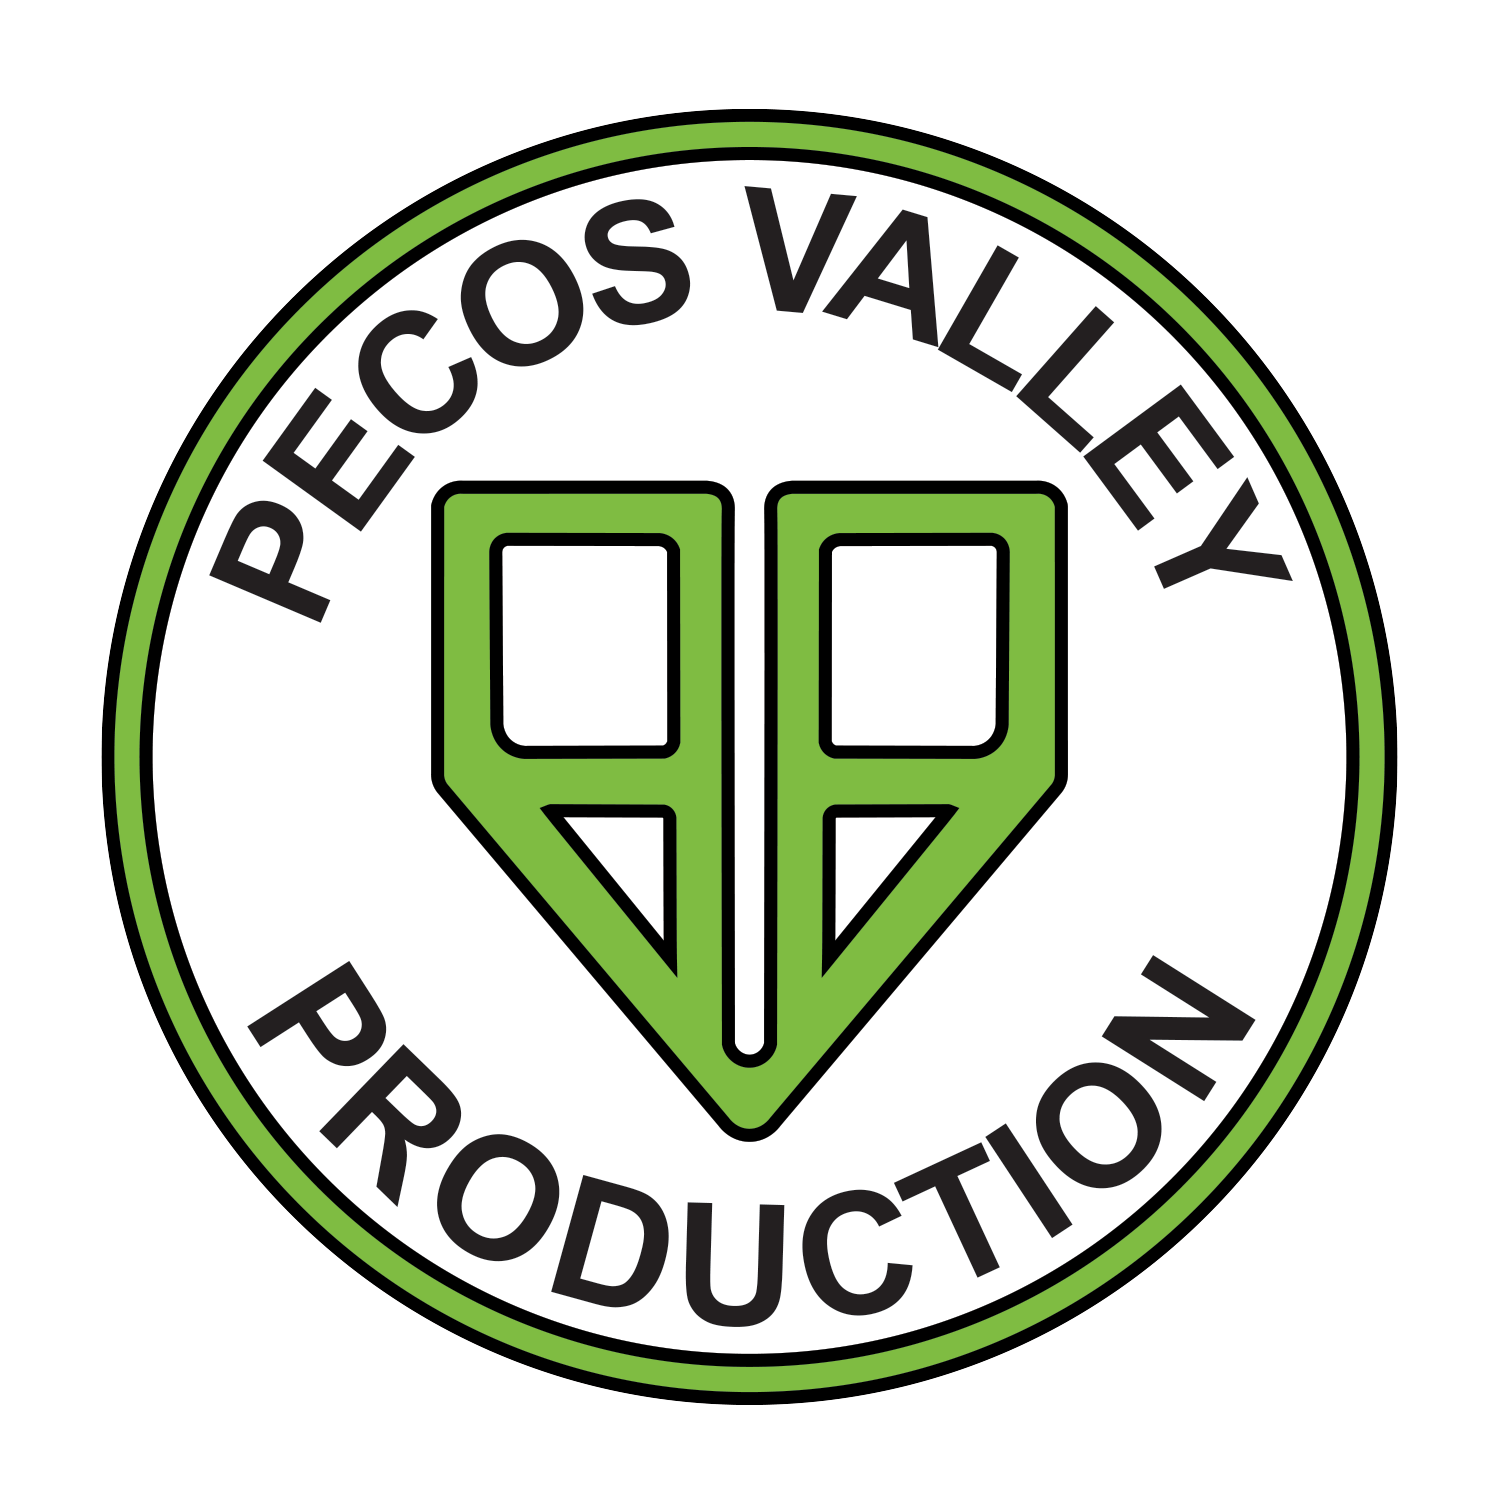 Pecos Valley Production - Edgewood